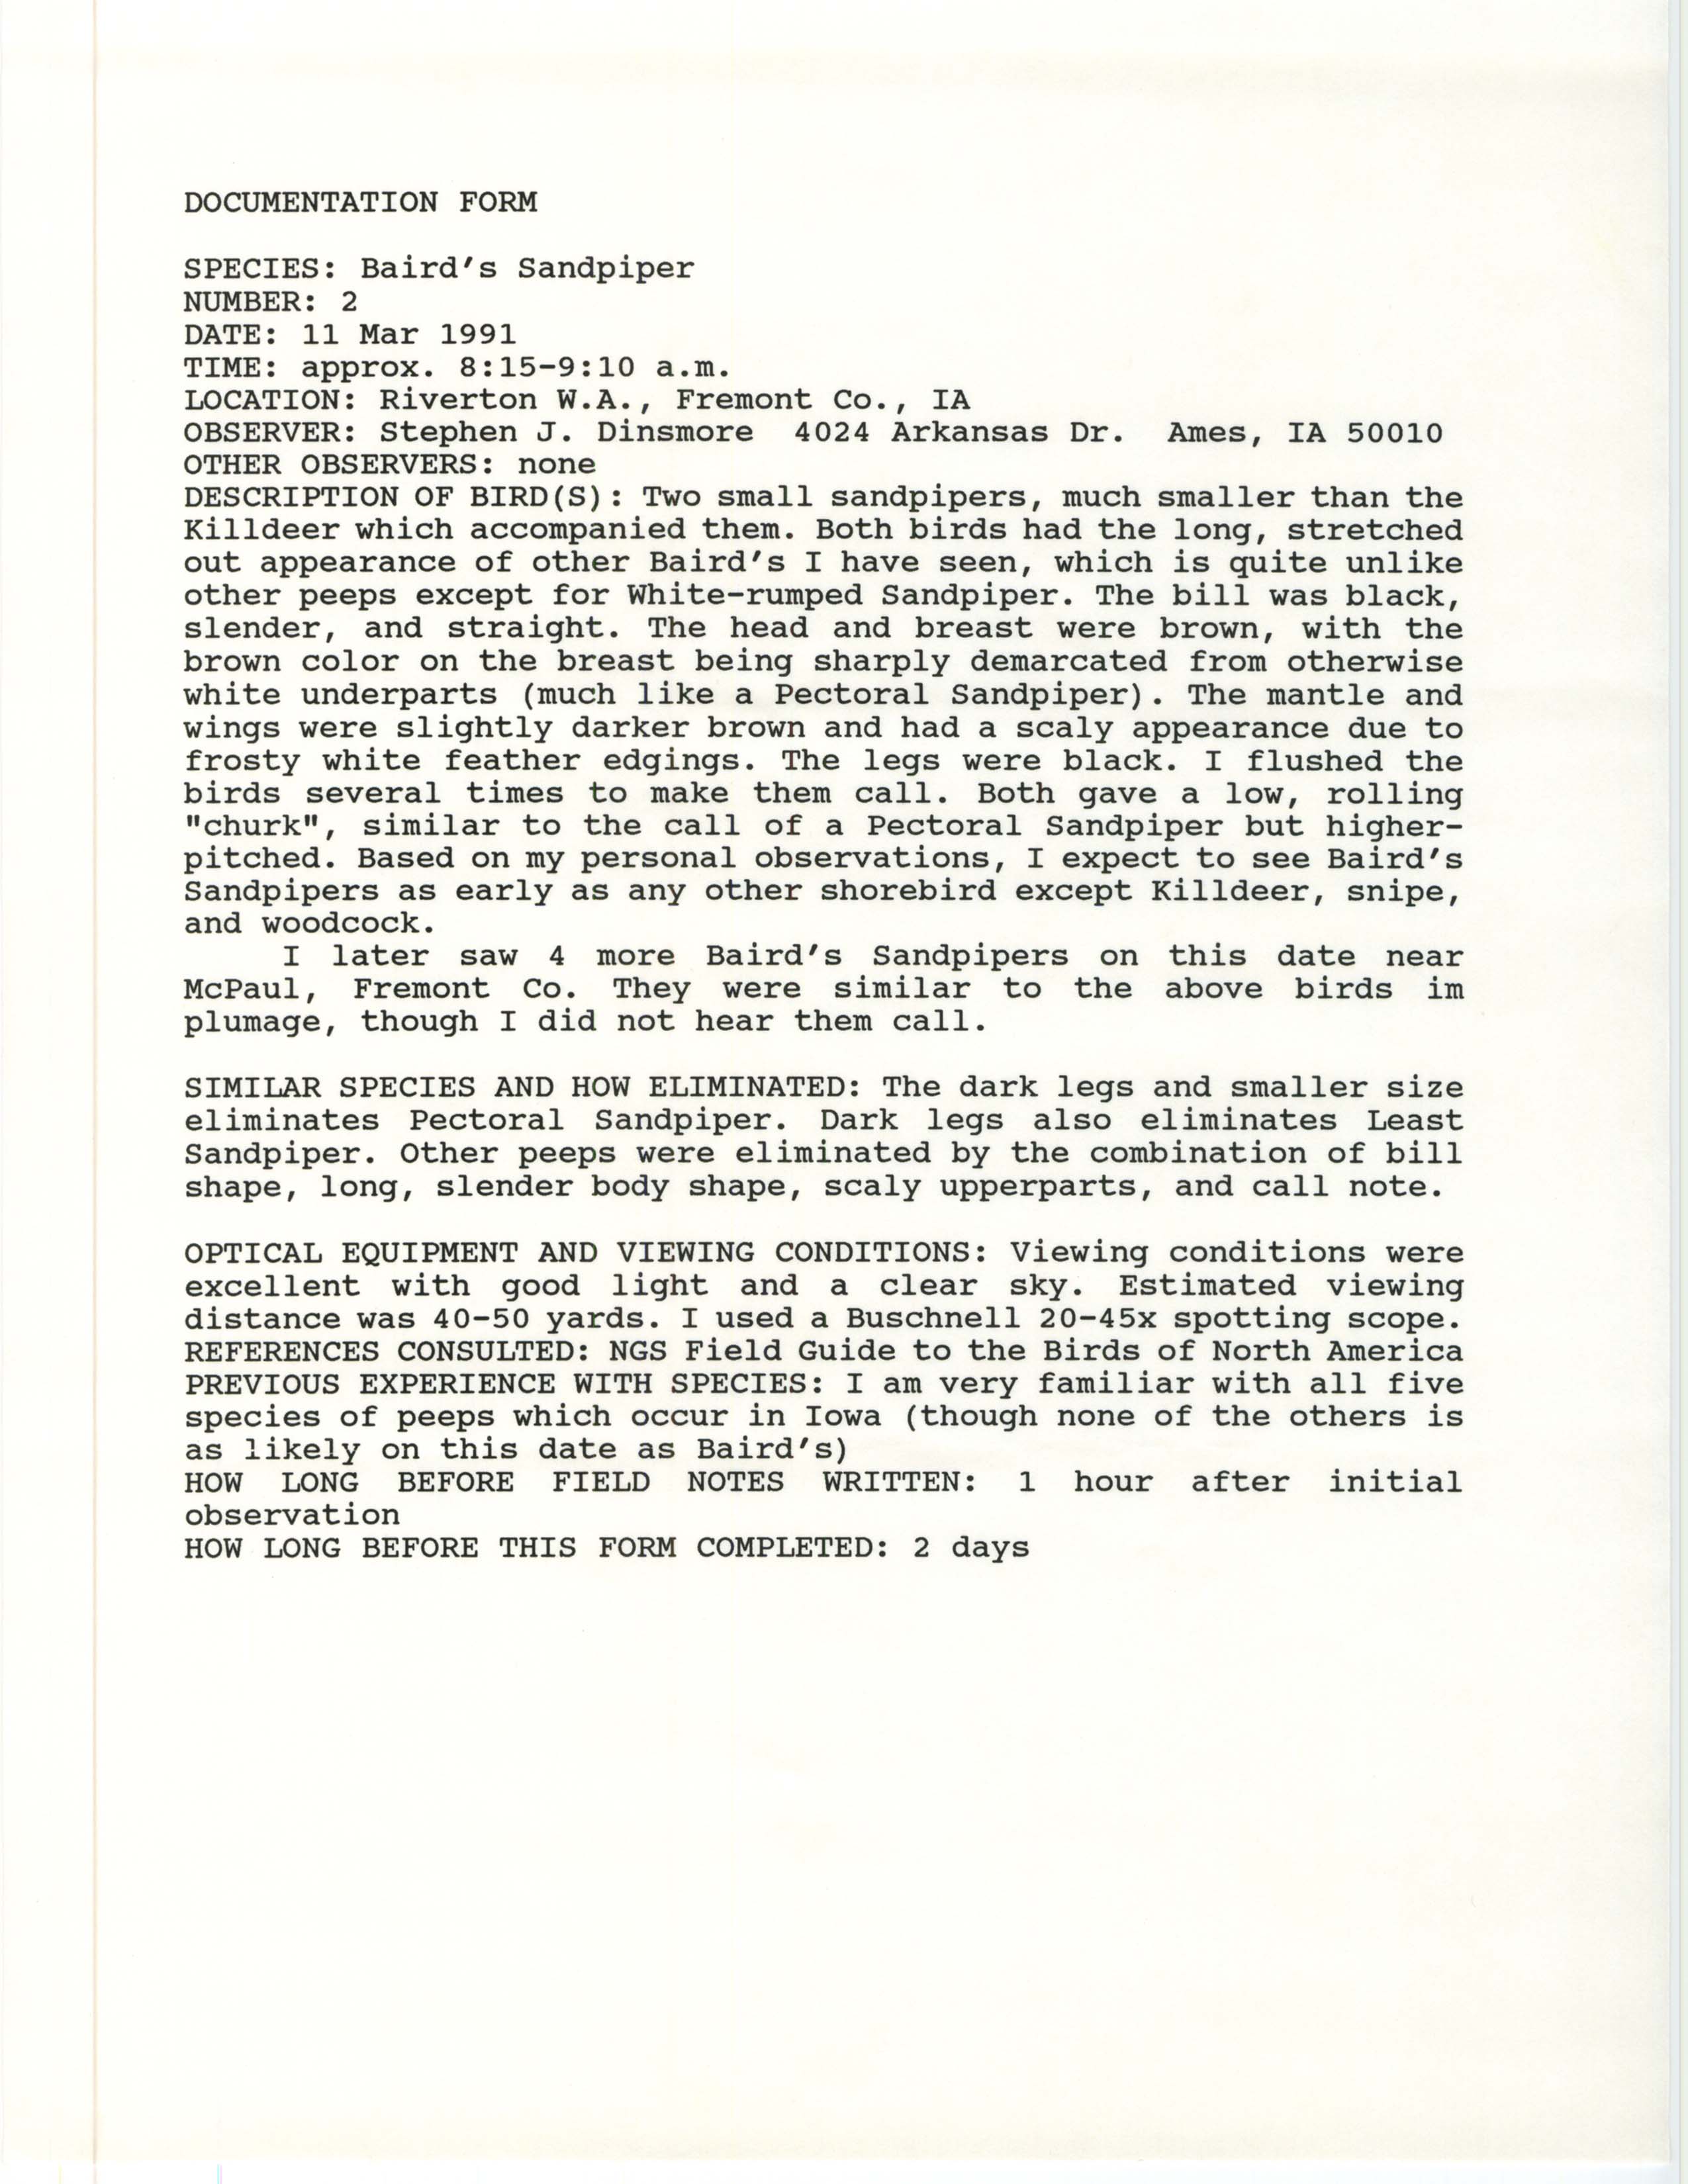 Rare bird documentation form for Baird's Sandpiper at Riverton Wildlife Area, 1991